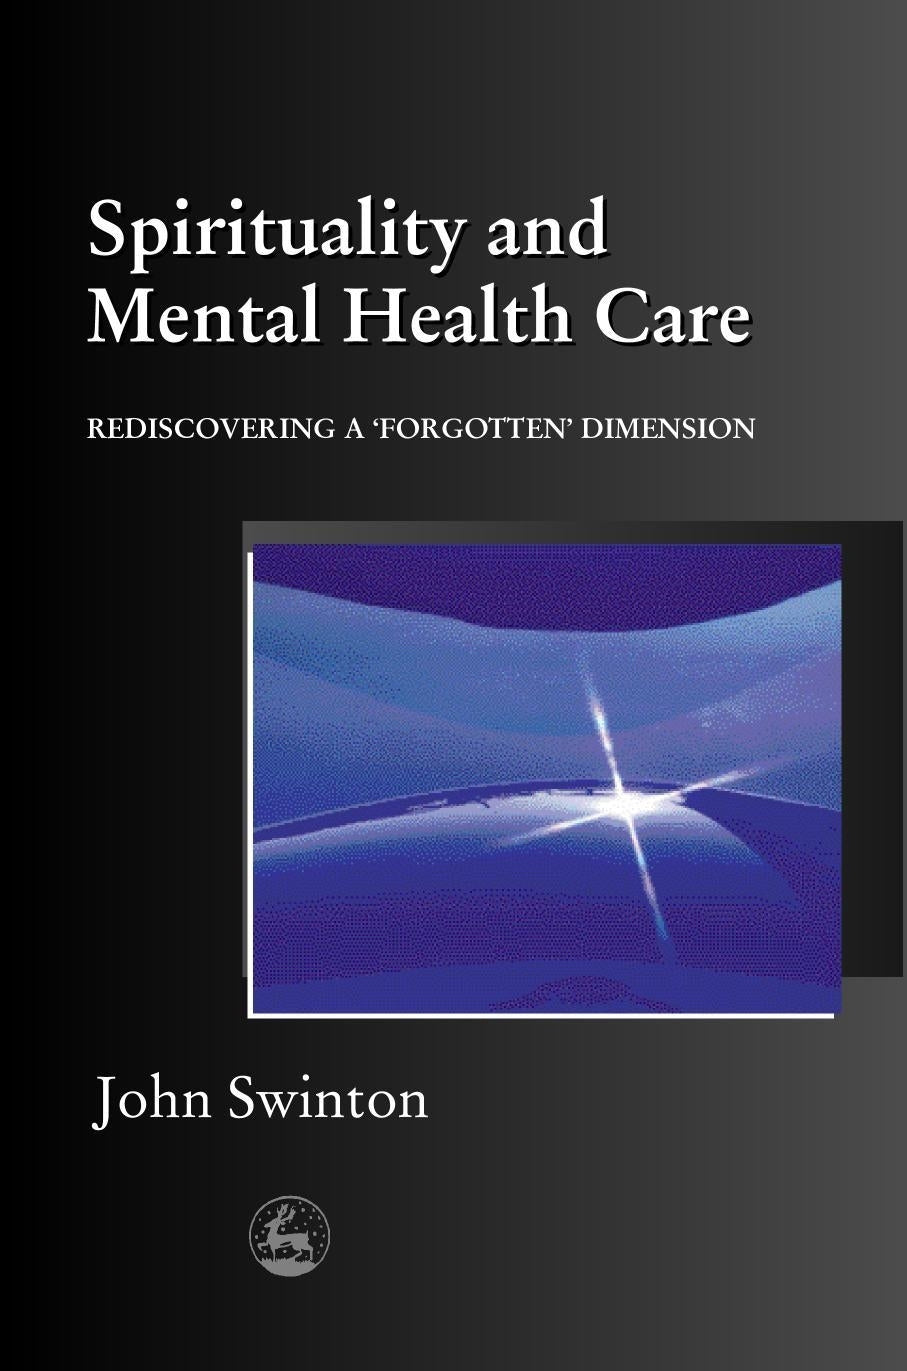 Spirituality and Mental Health Care by John Swinton